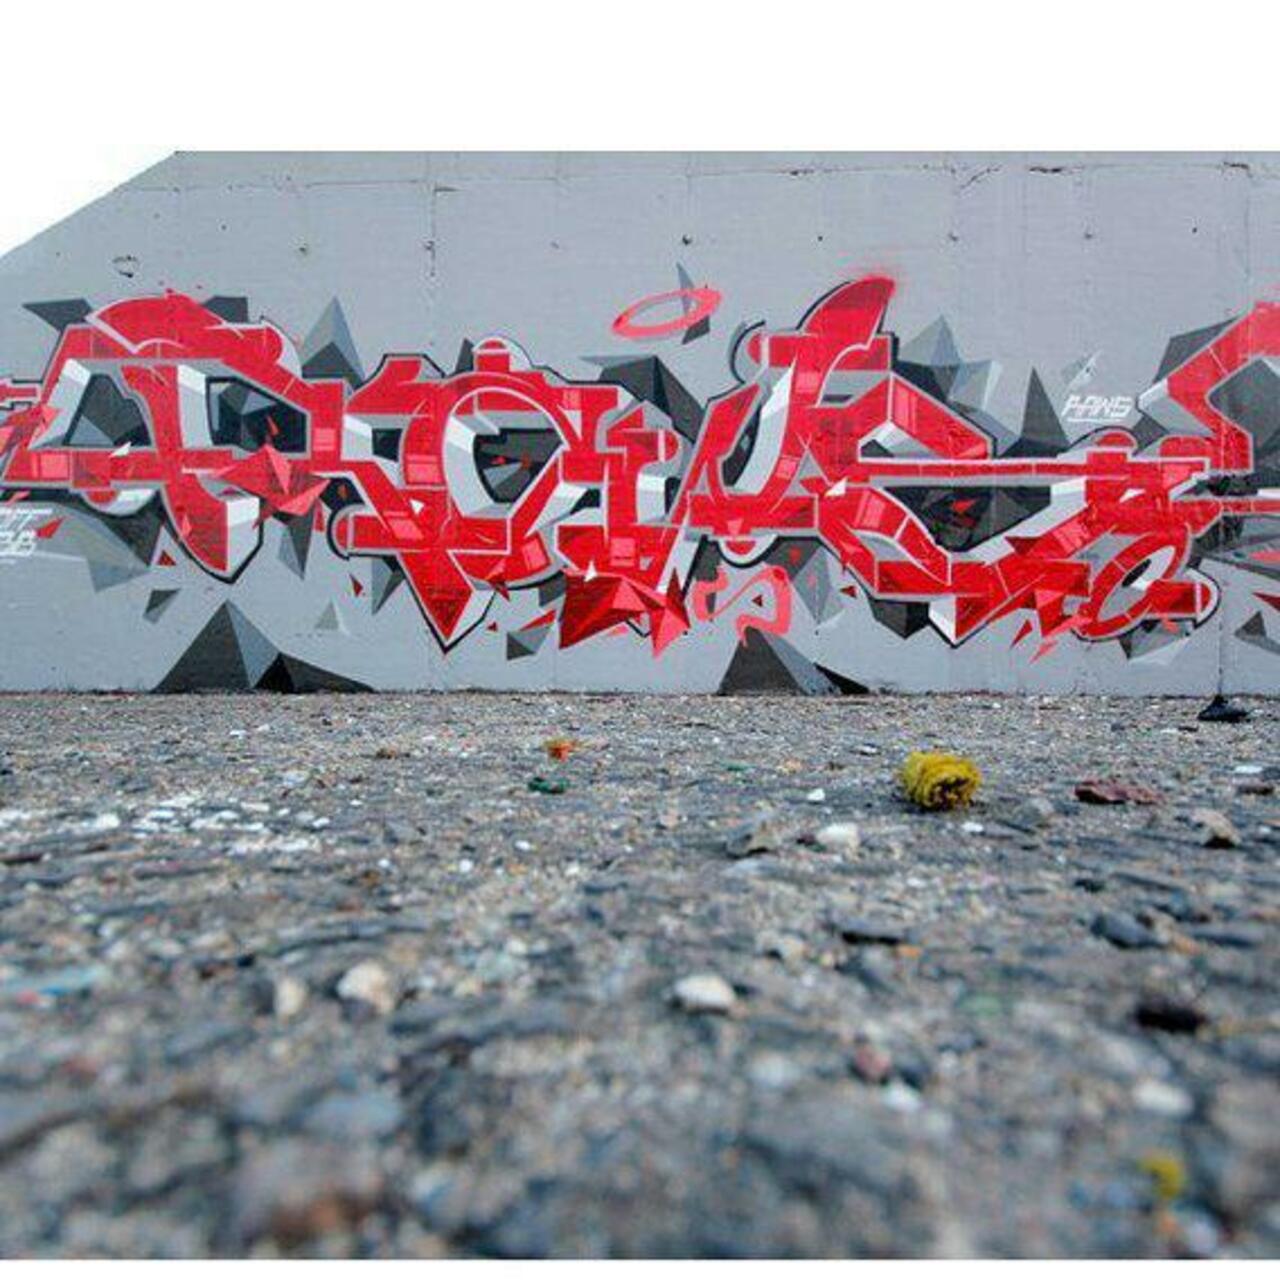 RT @artpushr: via #sourceandsteeze "http://ift.tt/1iHb5U6" #graffiti #streetart http://t.co/iEgSCrYETf